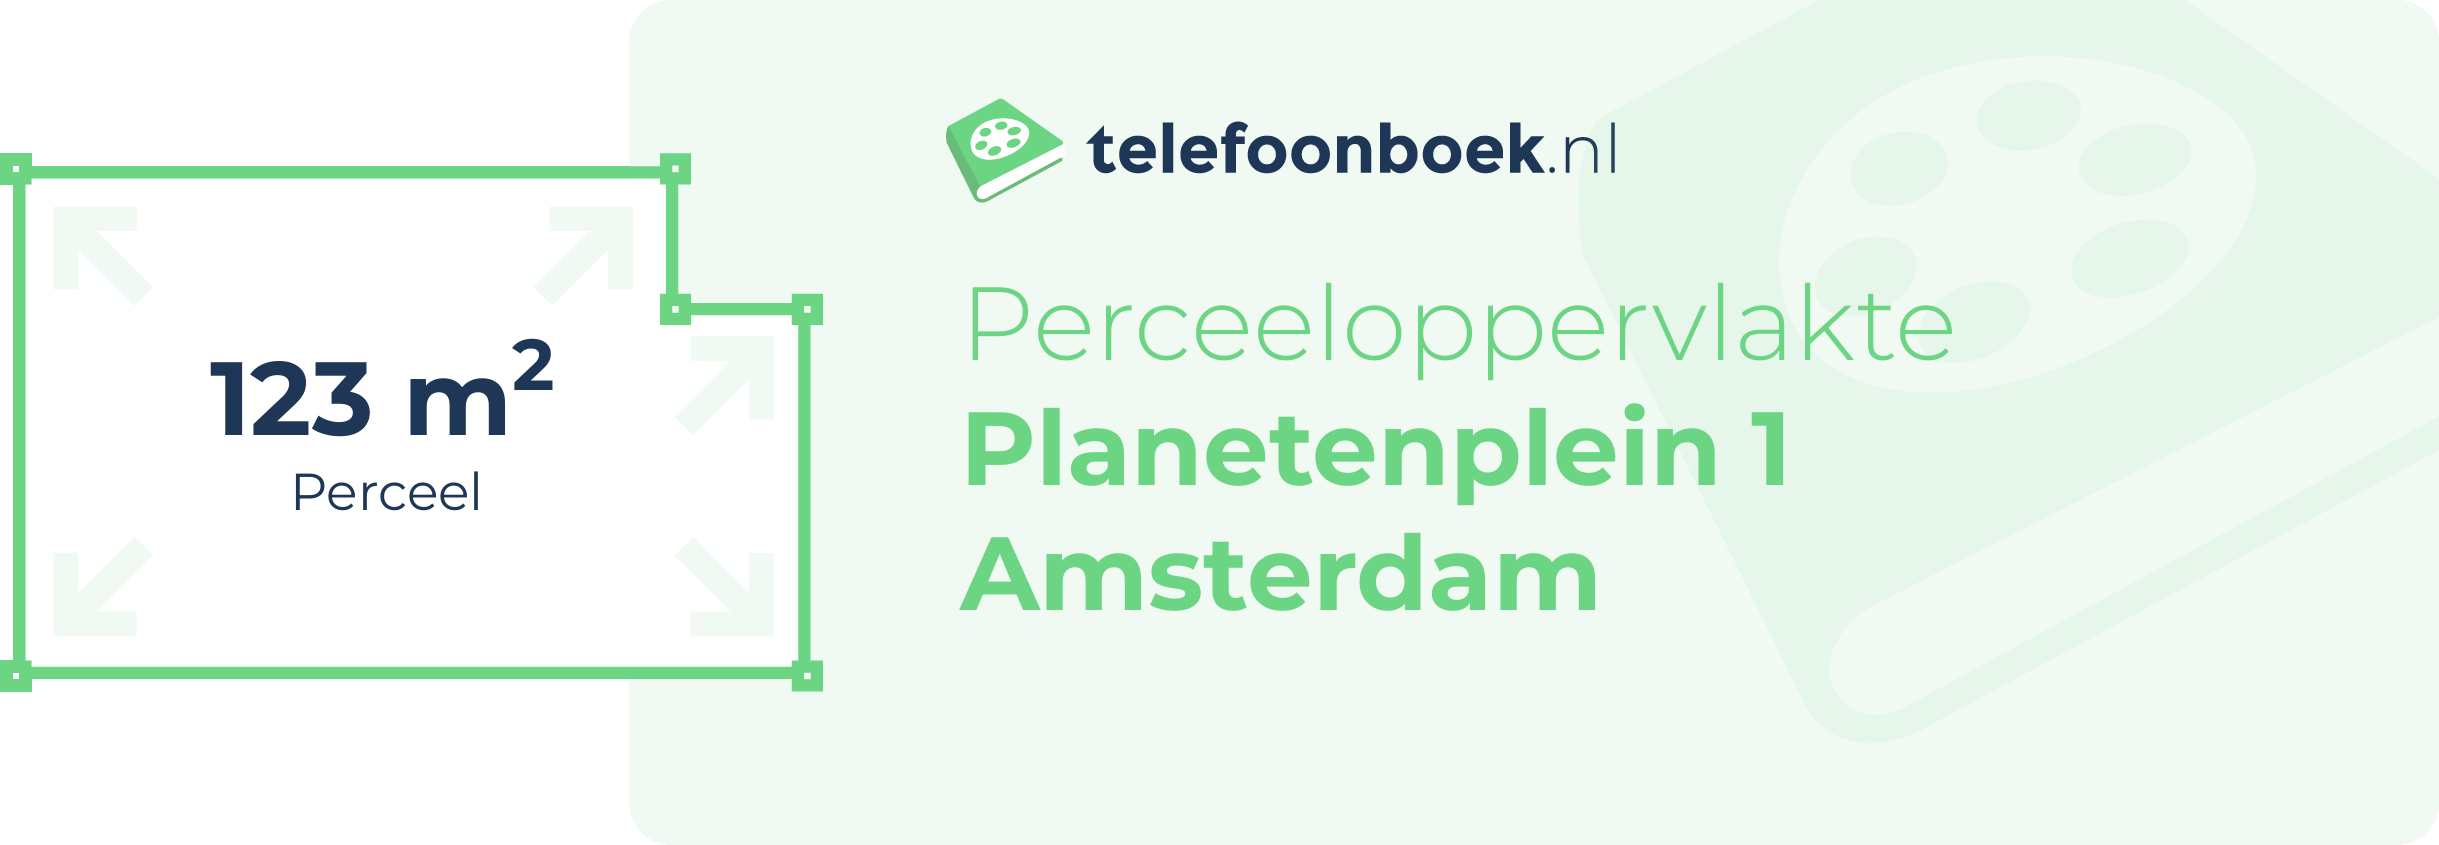 Perceeloppervlakte Planetenplein 1 Amsterdam